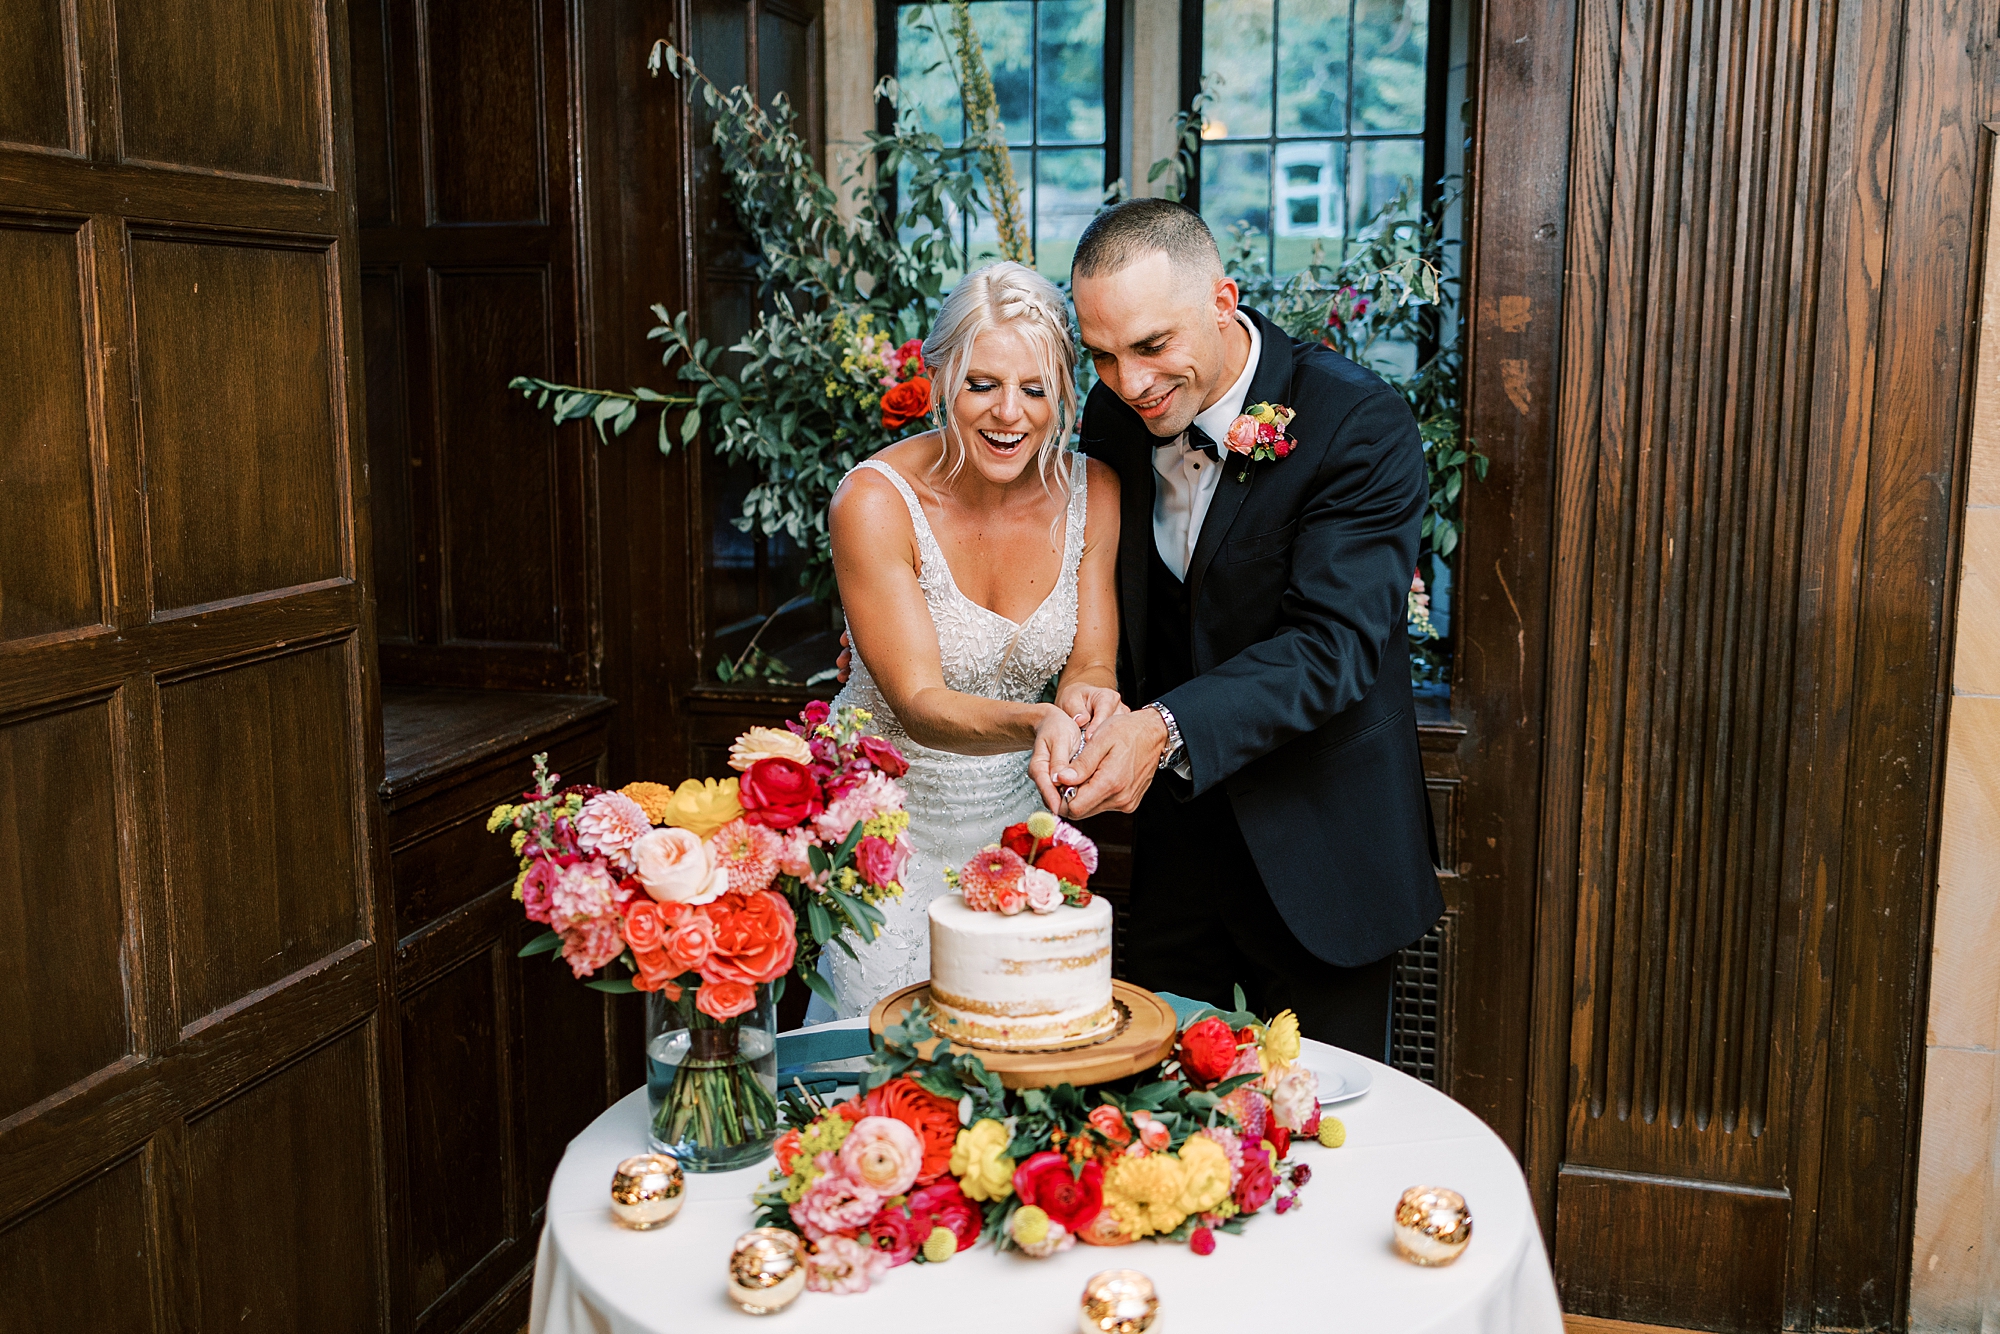 newlyweds cut wedding cake with bright flowers on cake 